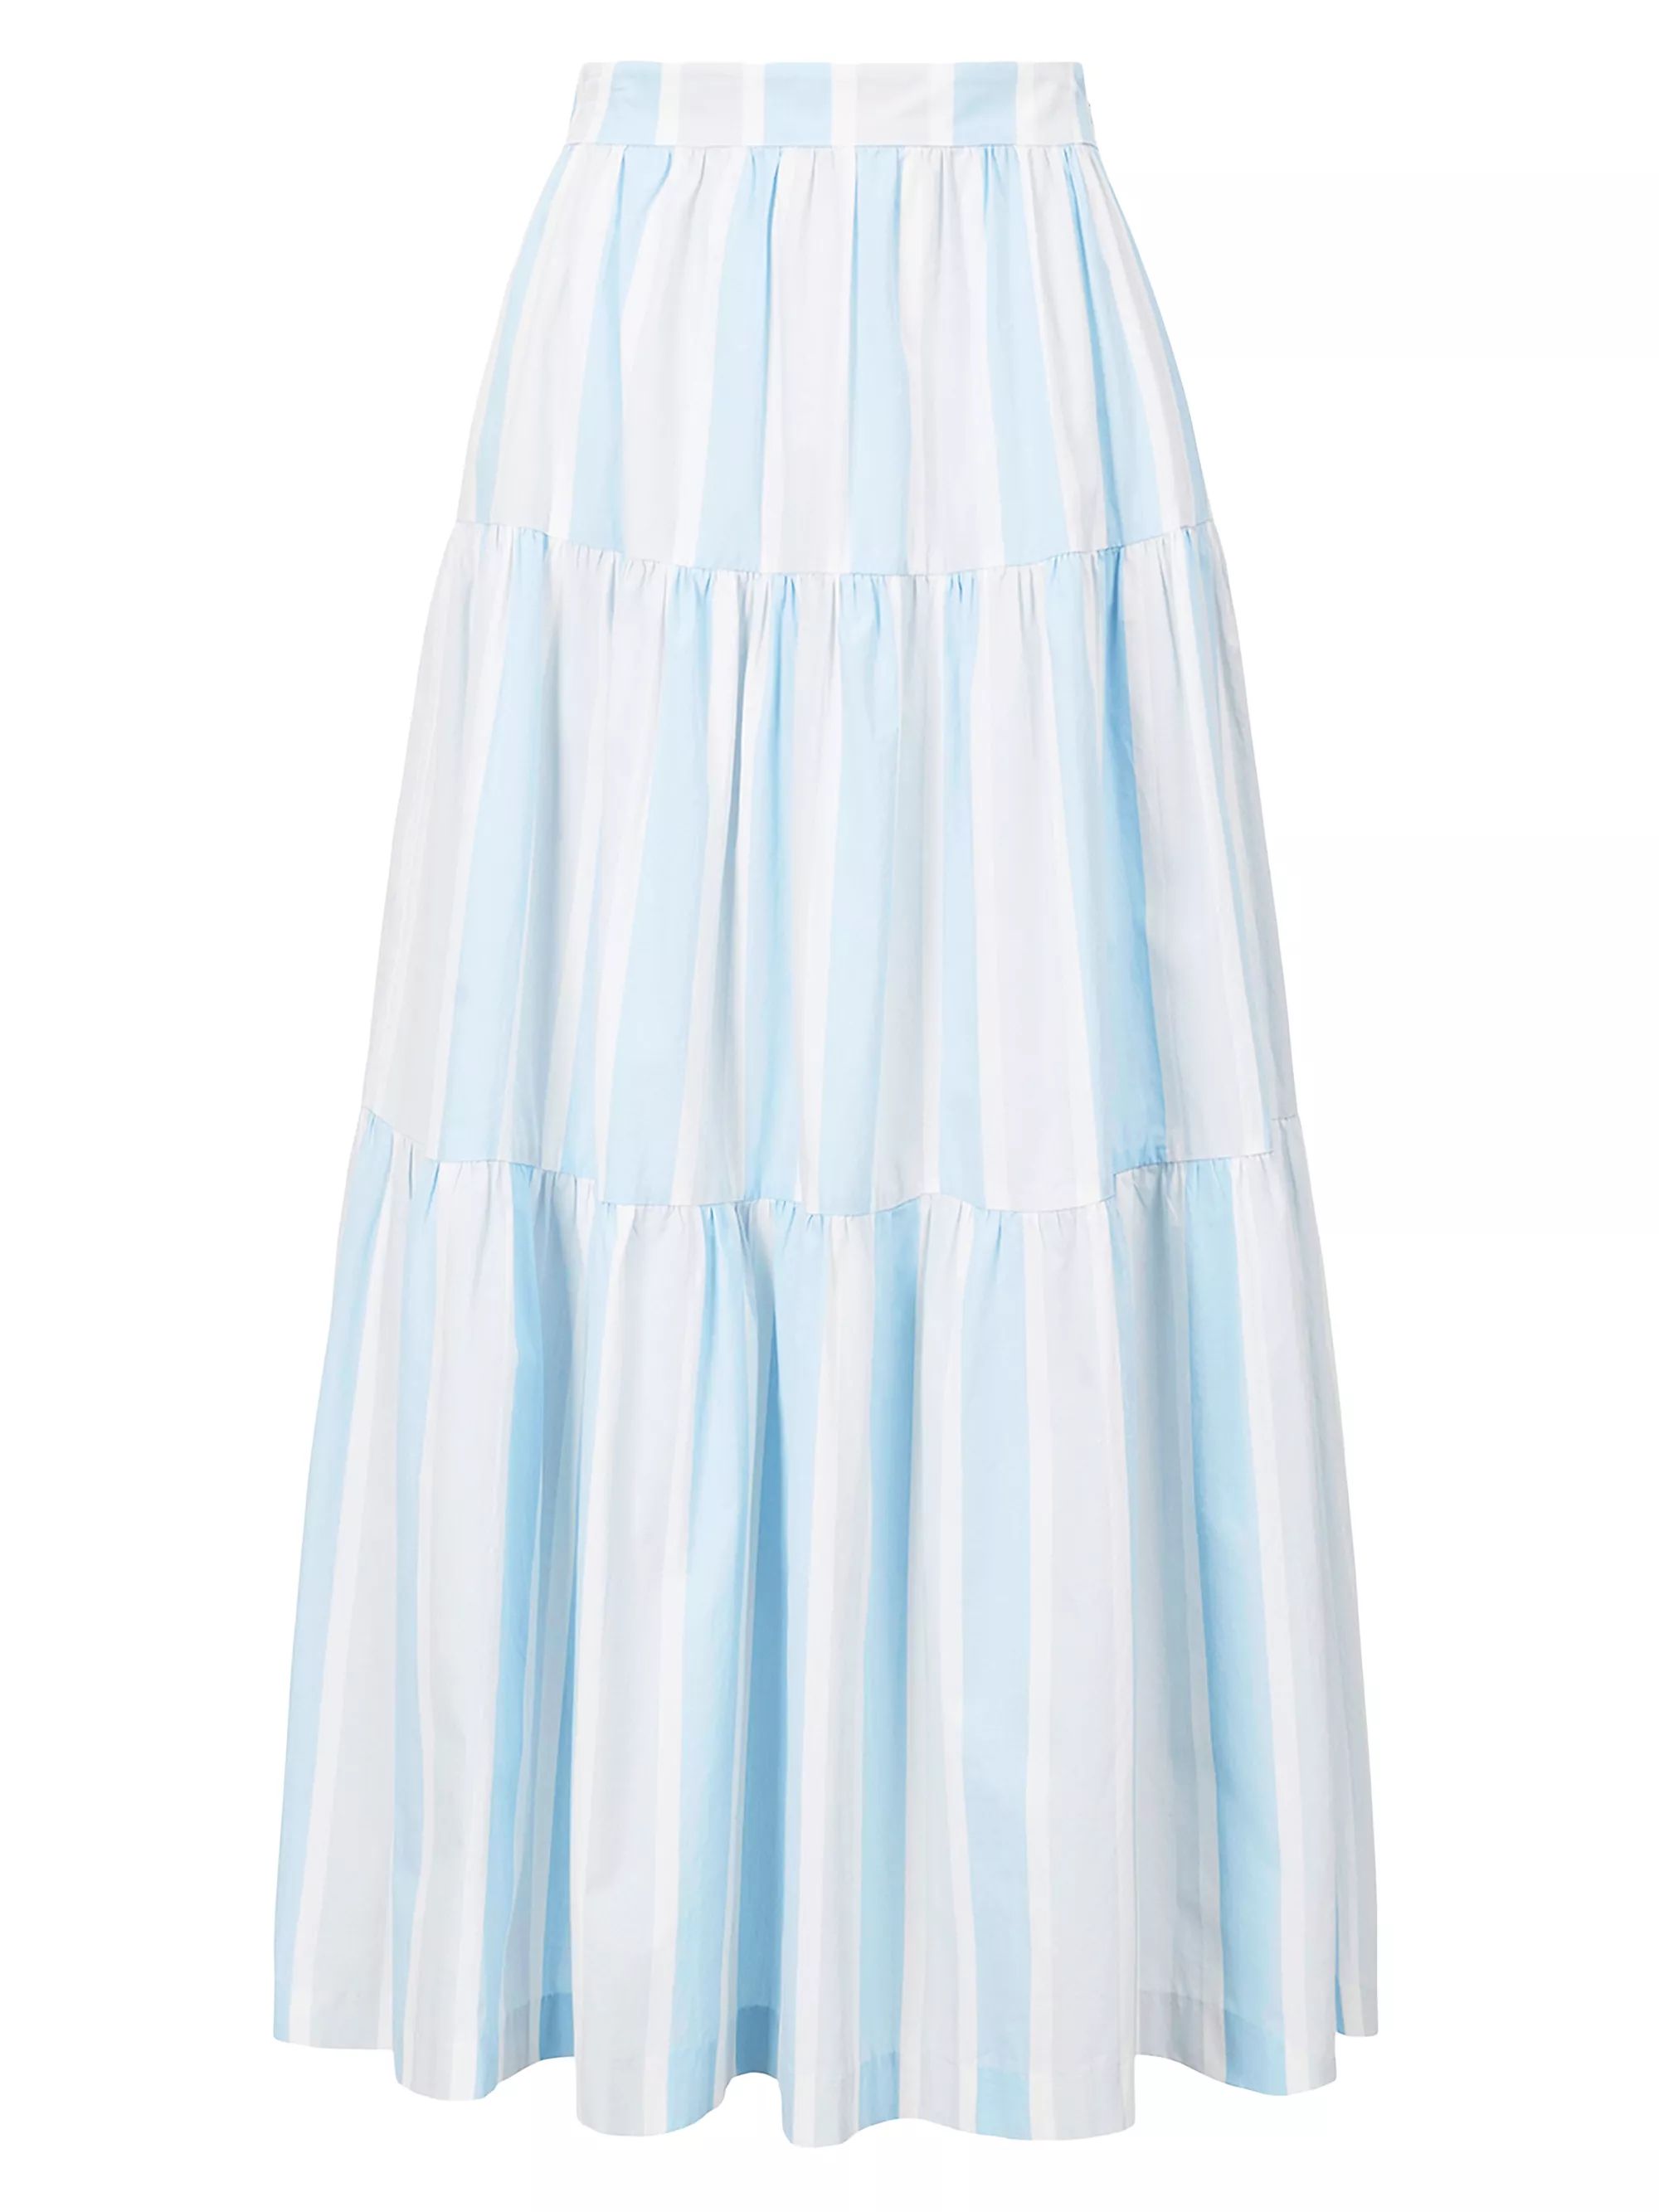 Adriatic StripeAll MaxiStaudSea Striped Cotton Maxi Skirt$250SELECT SIZE Free Shipping on $200+ ... | Saks Fifth Avenue